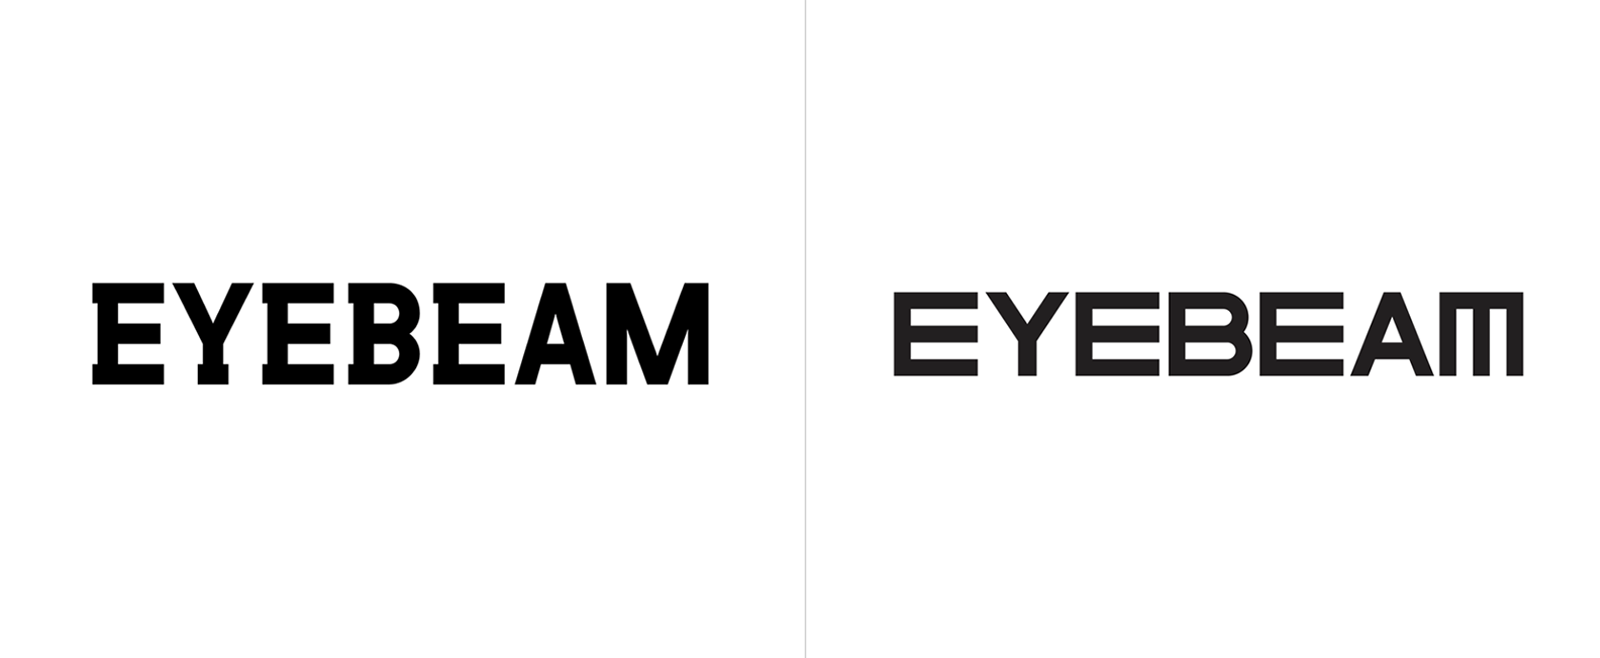 Eyebeam即时通讯品牌启用全新的品牌VI视觉形象设计-深圳VI设计